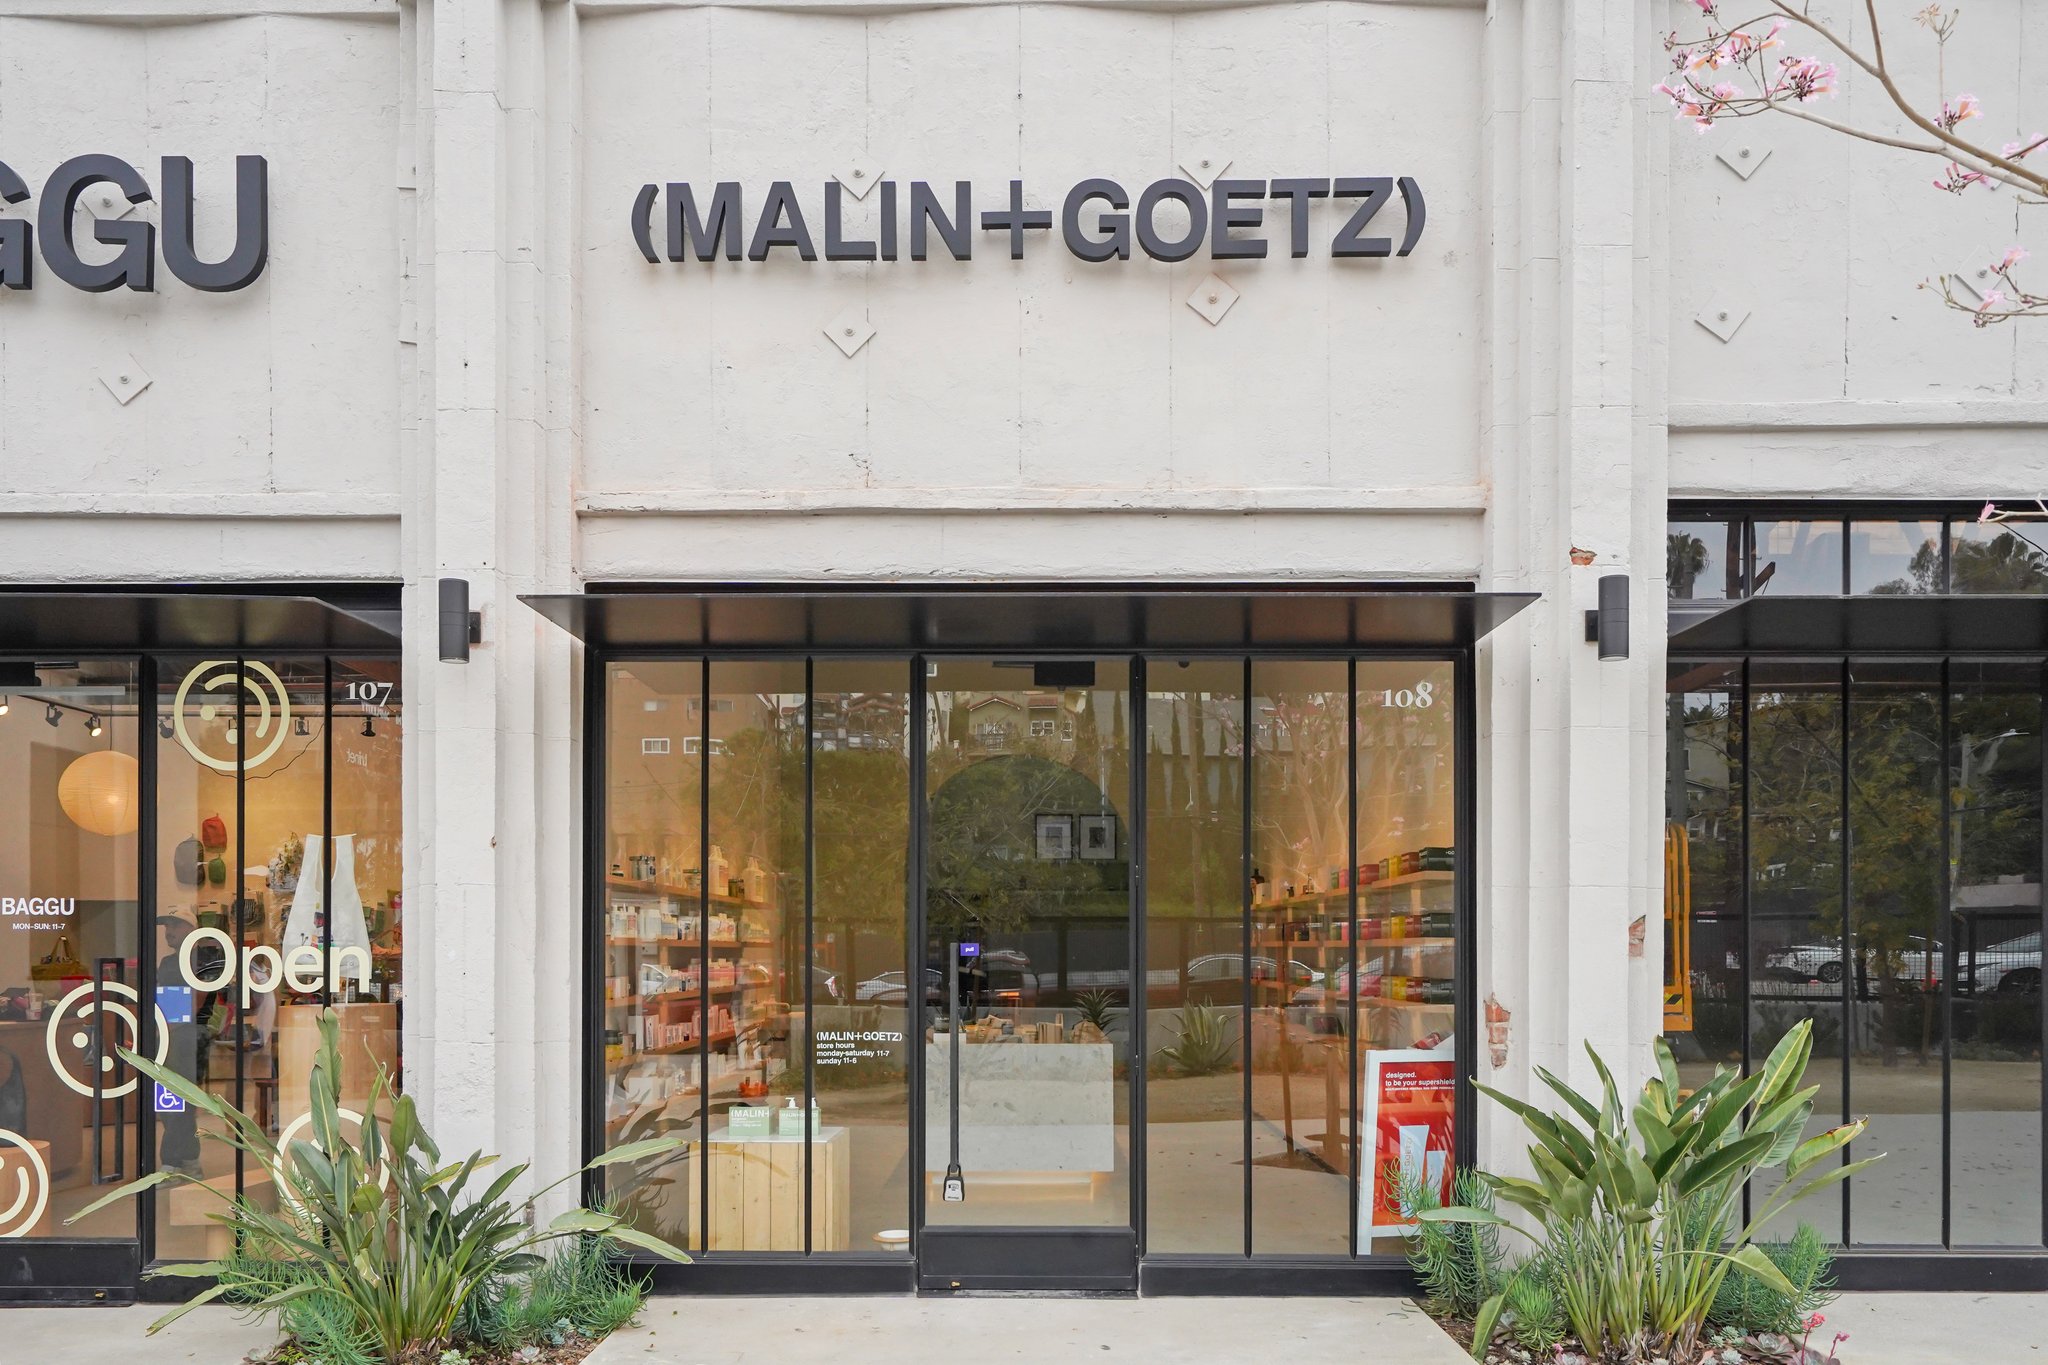 Malin & Goetz